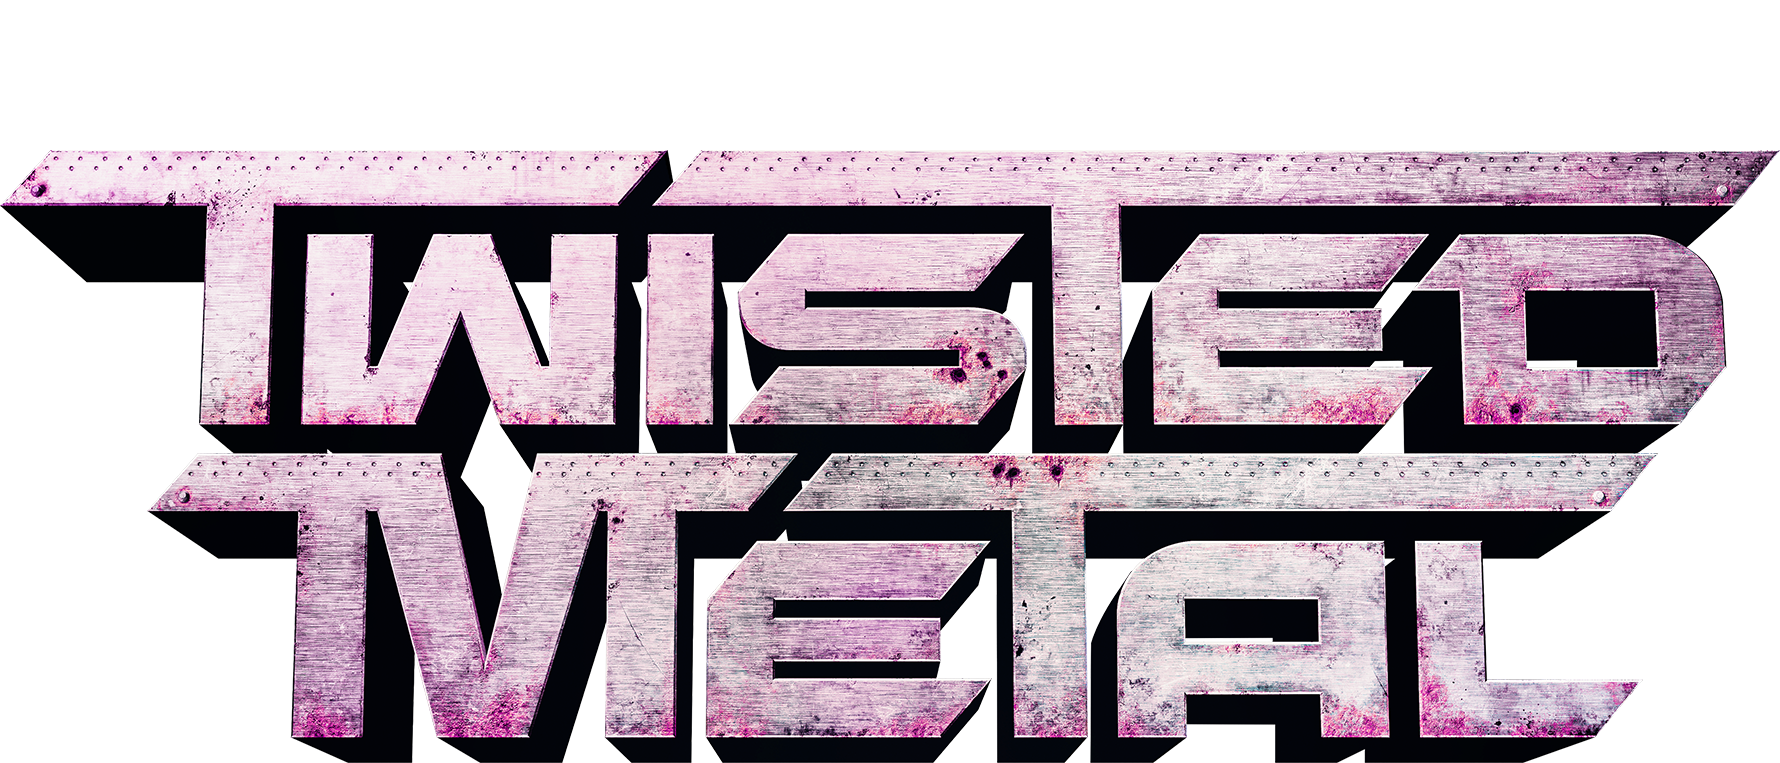 Twisted Metal Logo